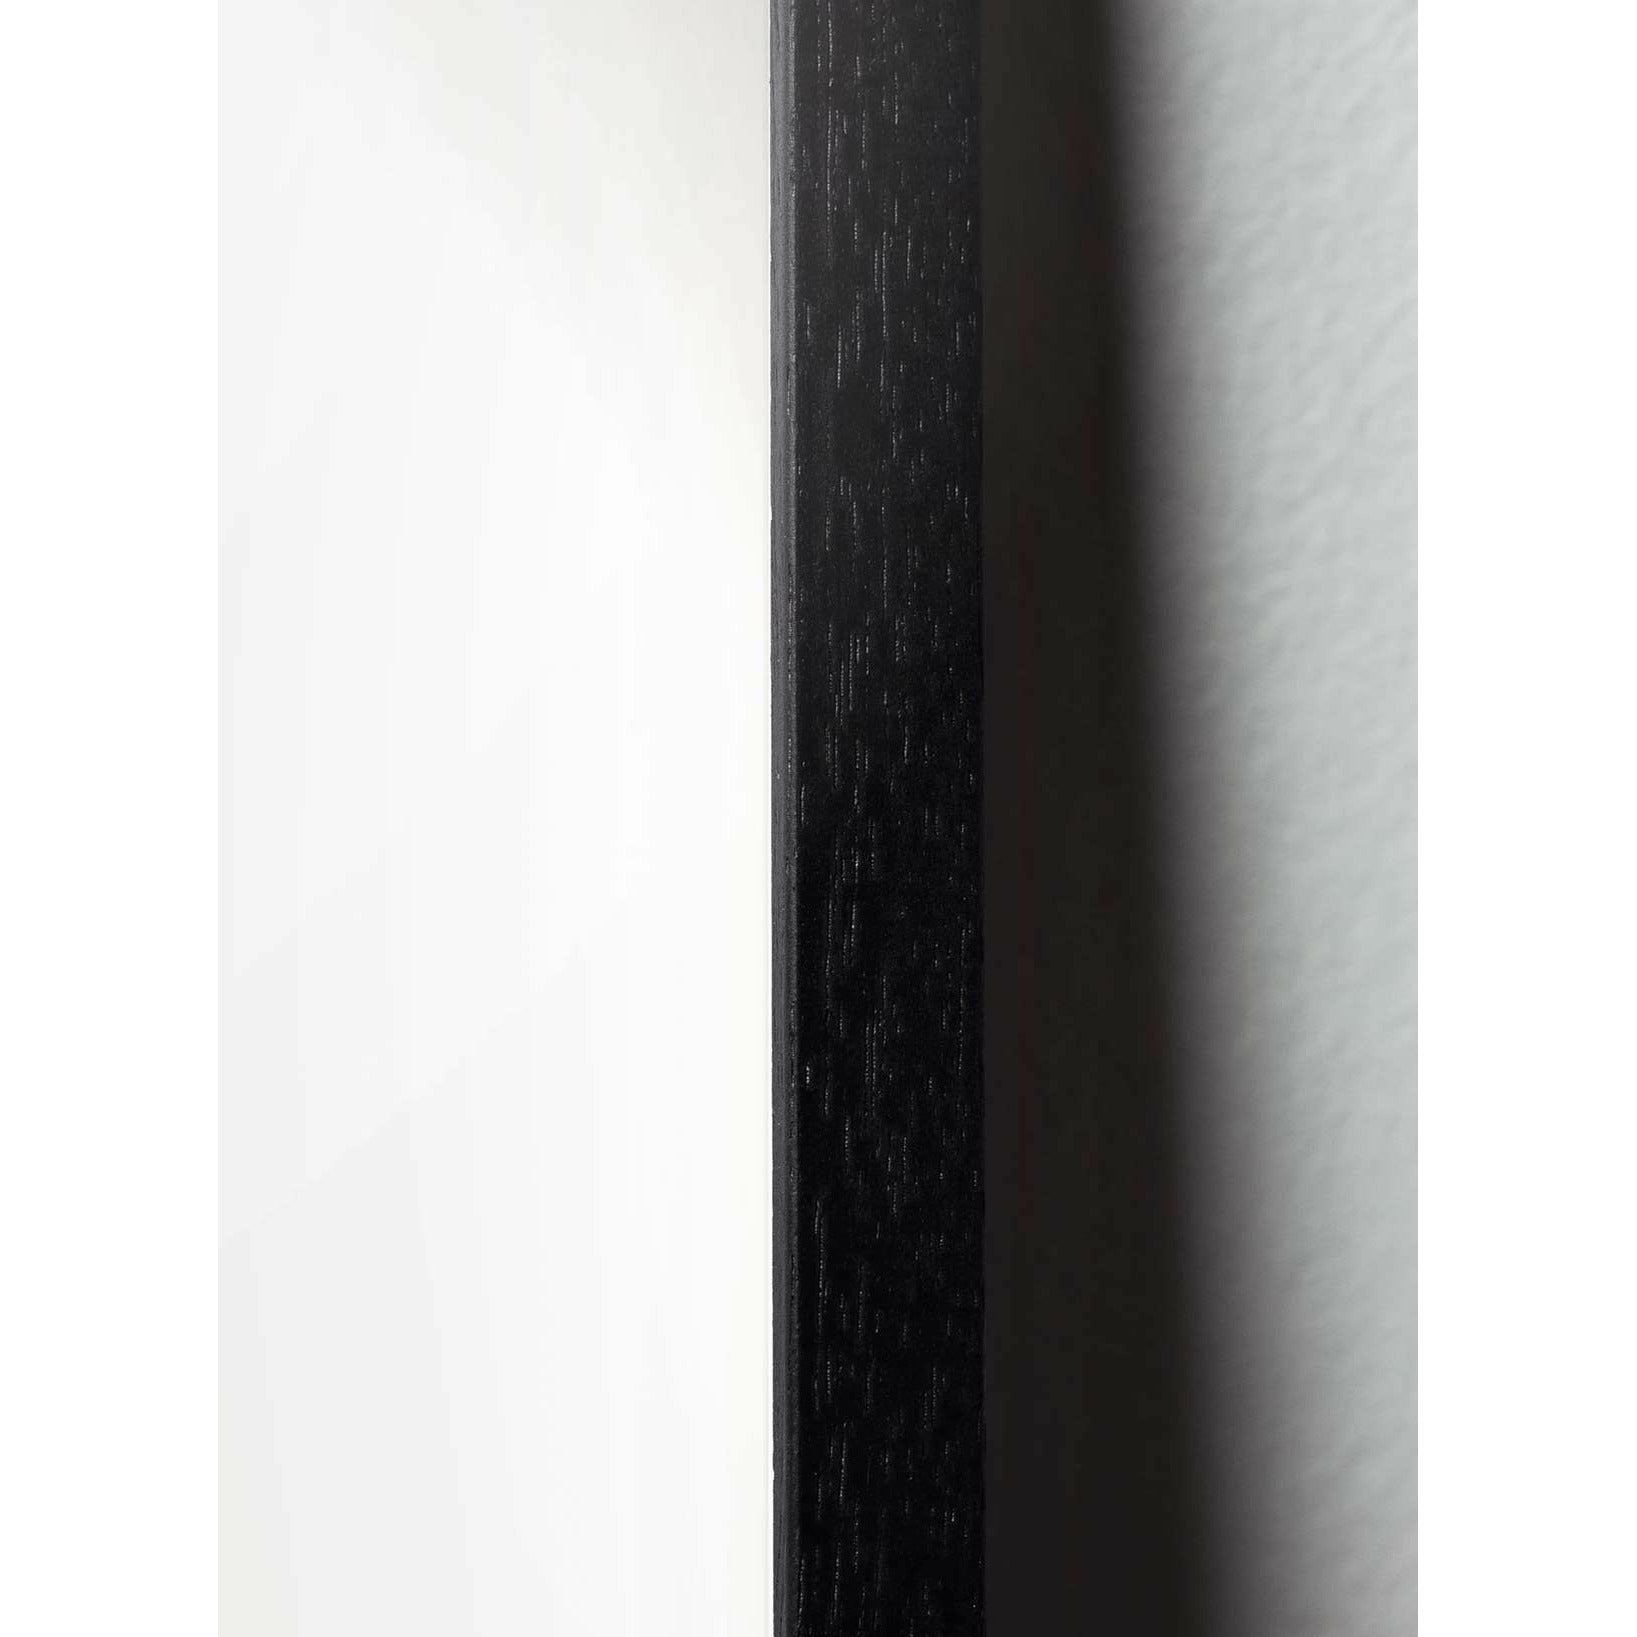 Brainchild Ant klassisk affisch, ram i svart -målat trä A5, sandfärgad bakgrund